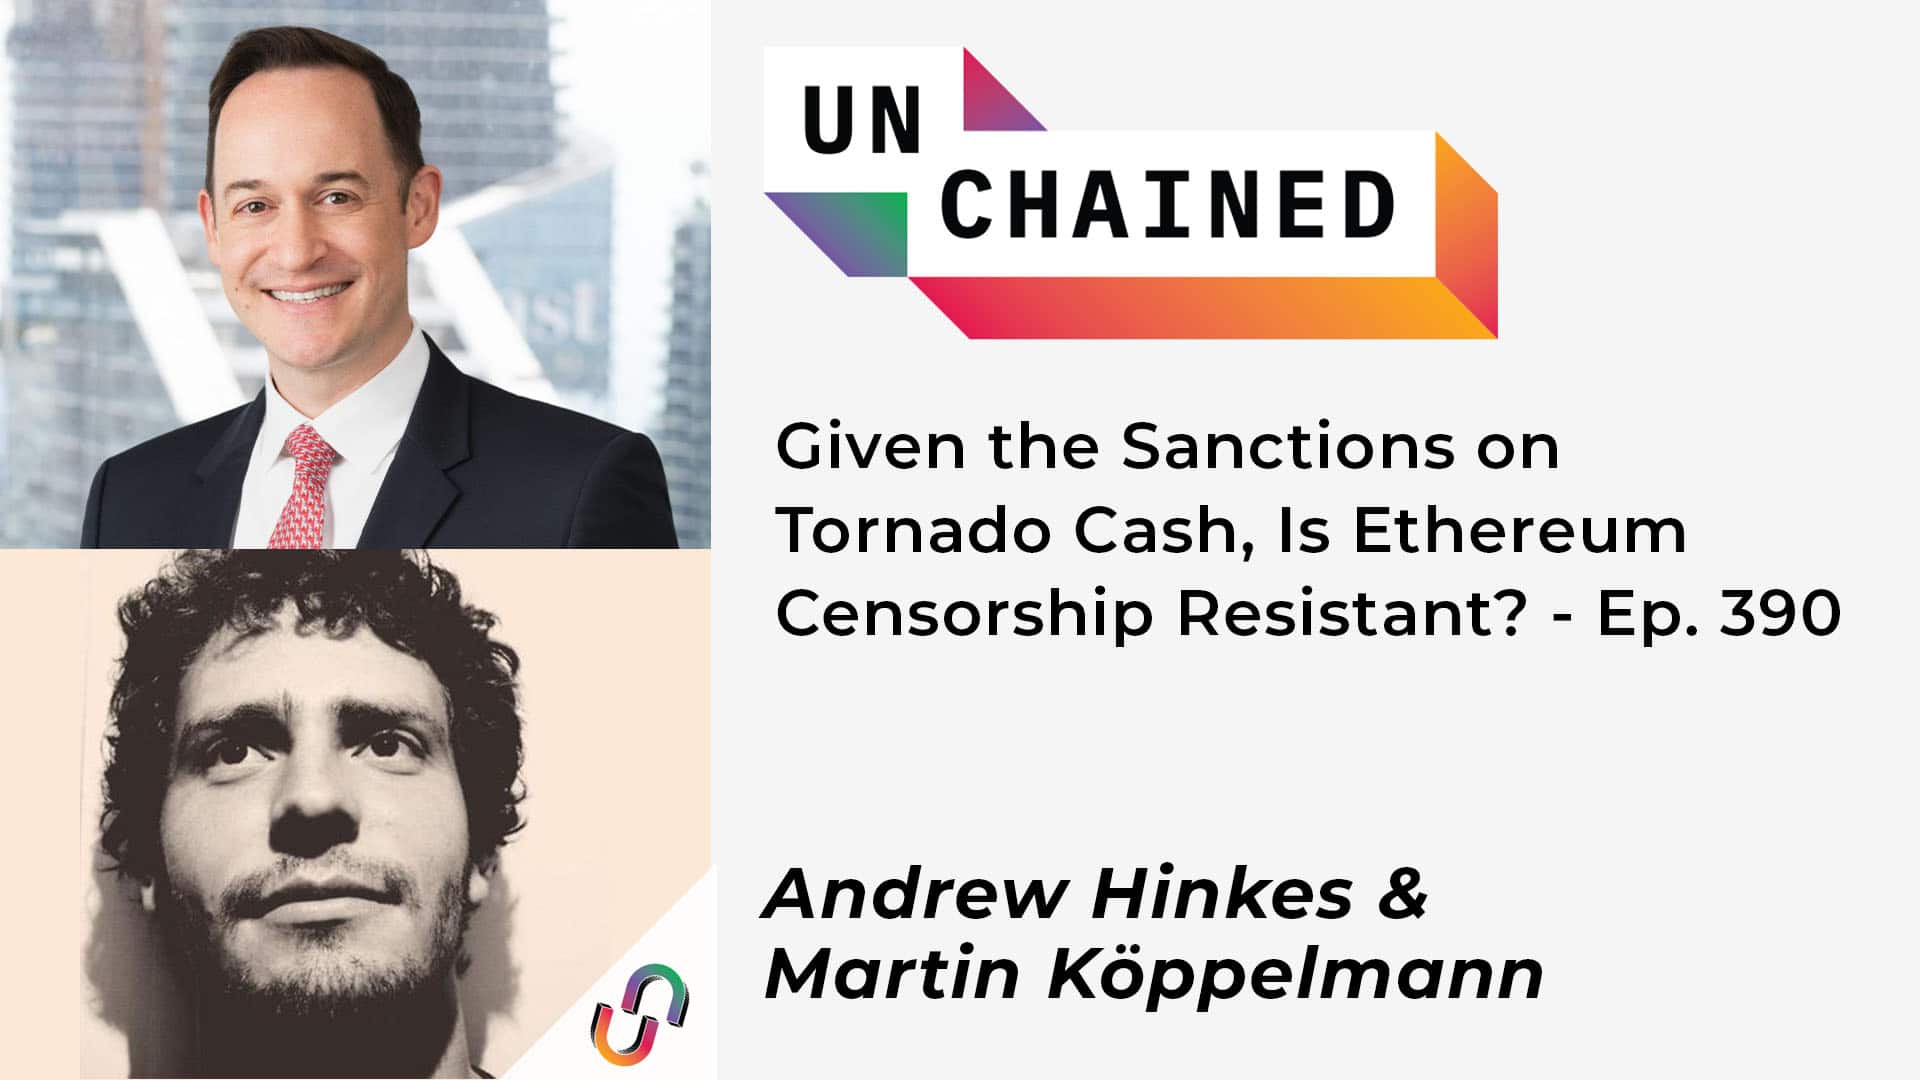 Given the Sanctions on Tornado Cash, Is Ethereum Censorship Resistant? - Ep. 390